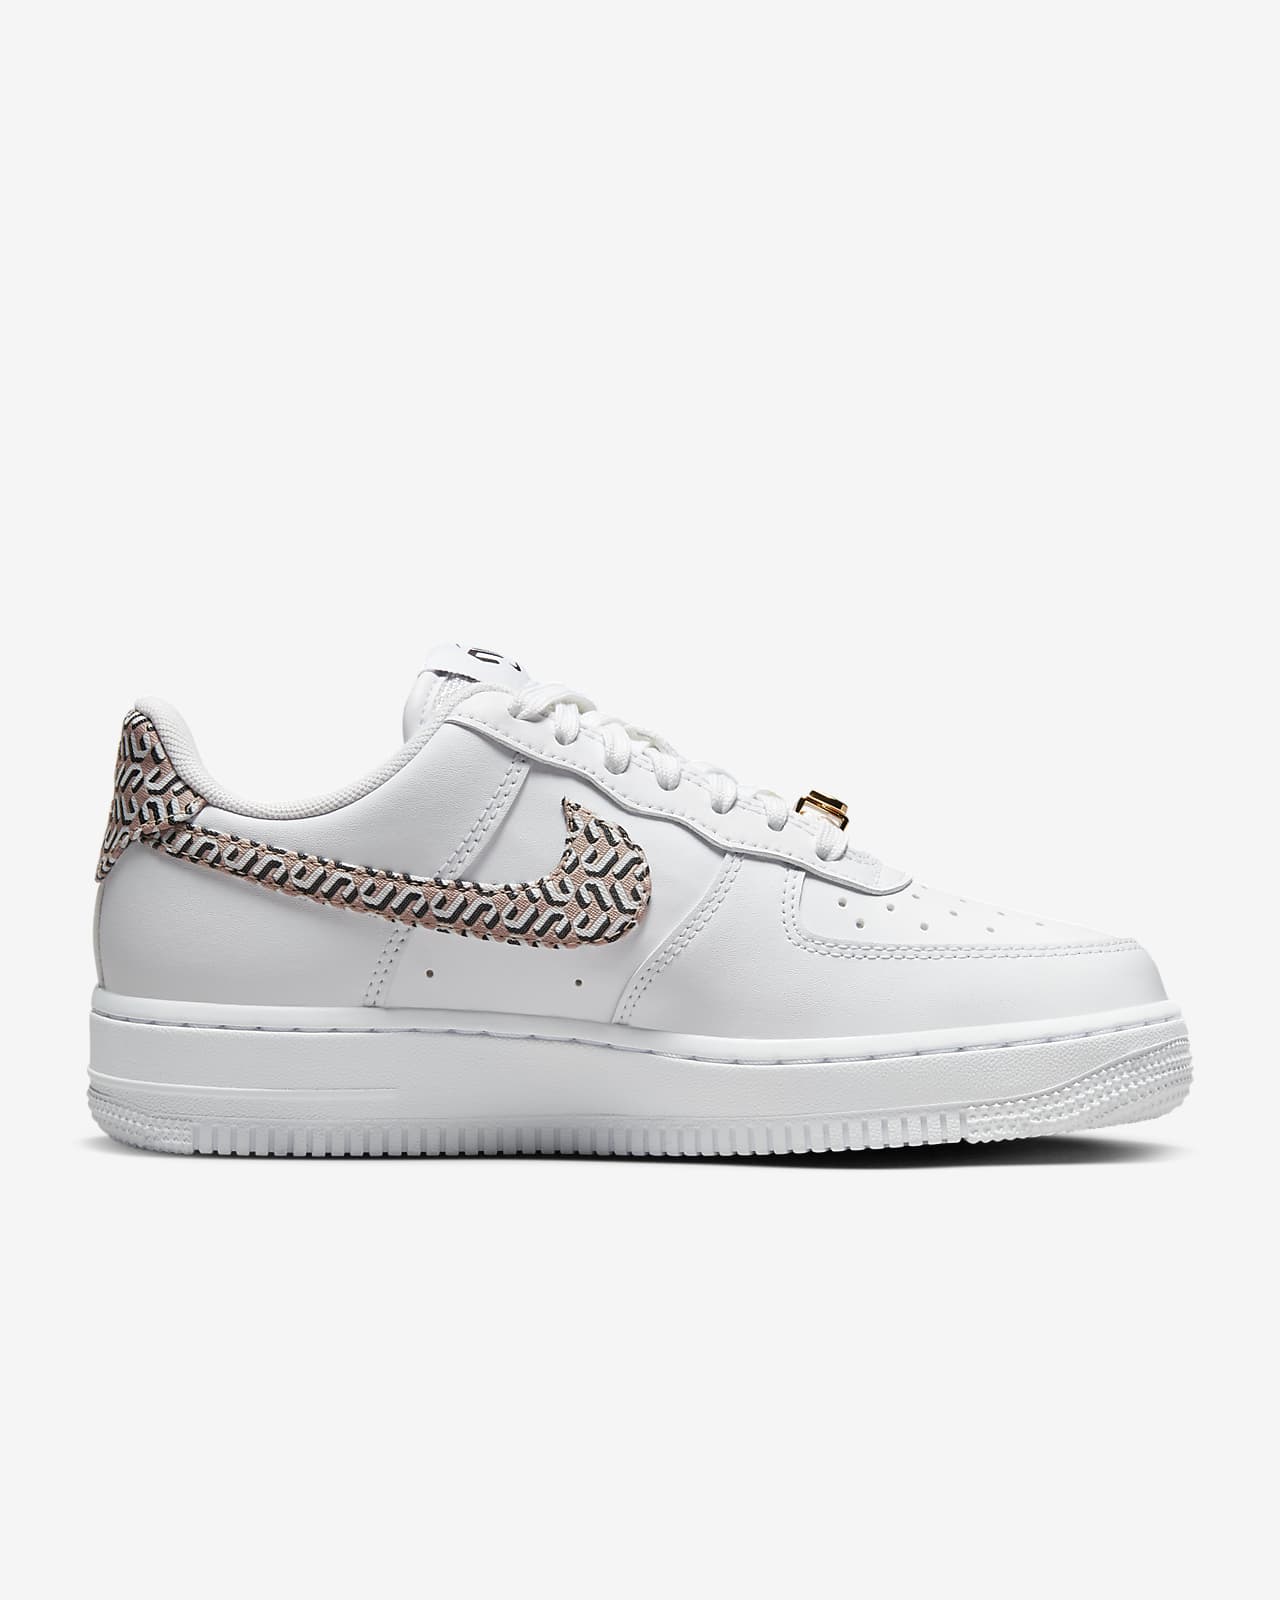 Air Force 1 Shoes. Nike PH